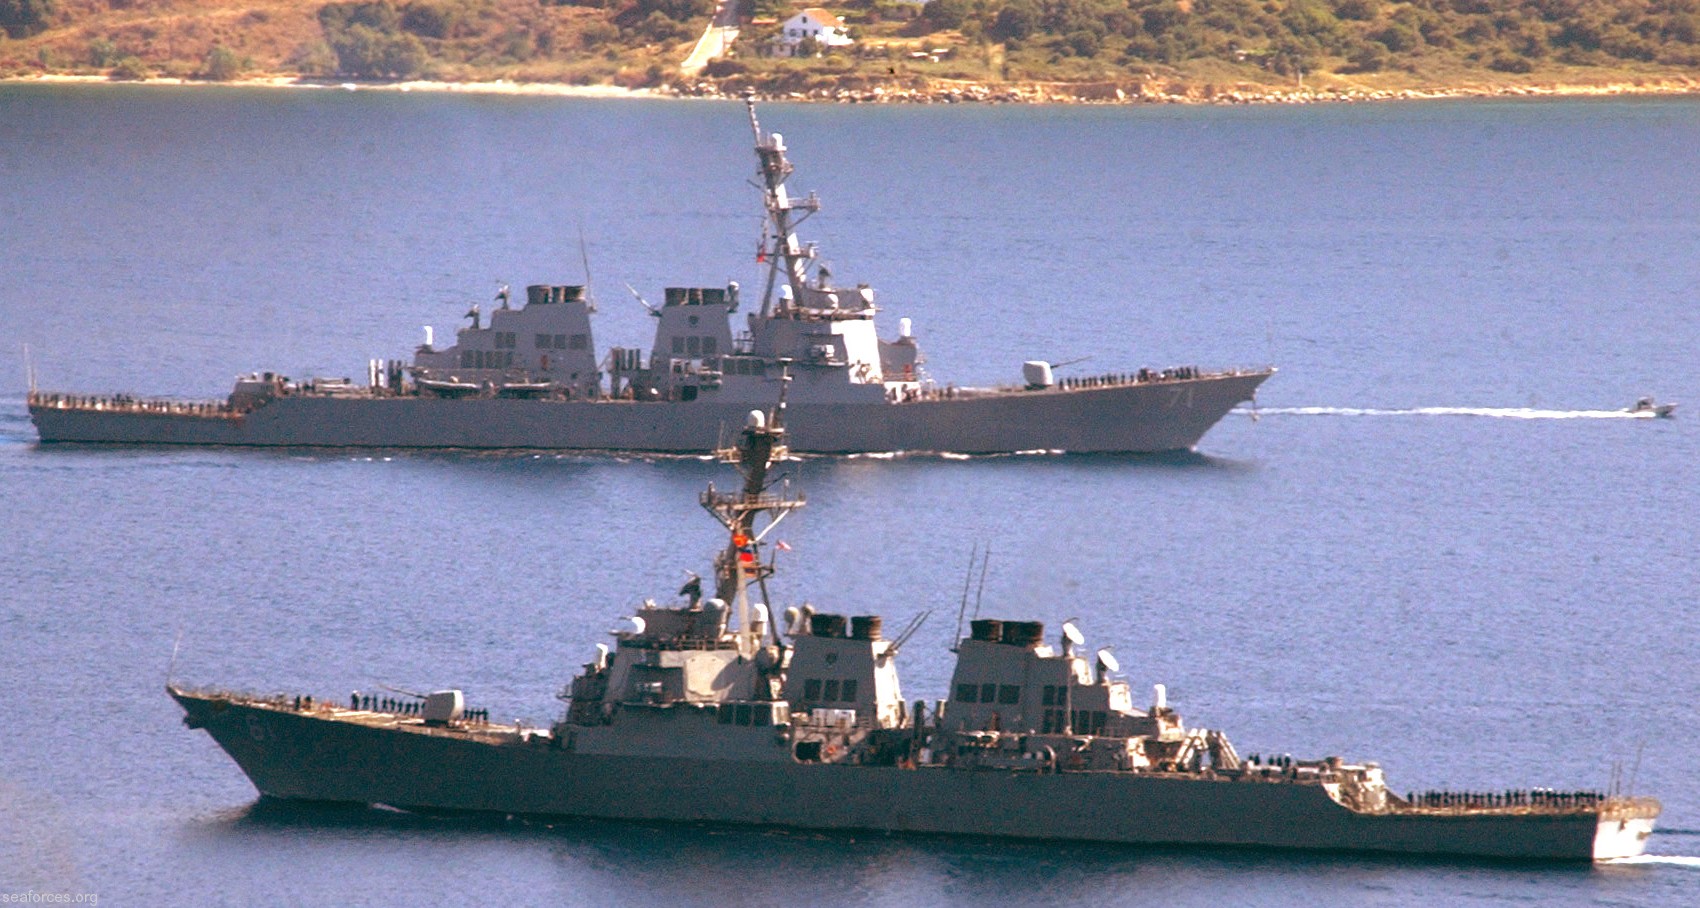 ddg-61 uss ramage guided missile destroyer us navy 66 souda bay crete greece